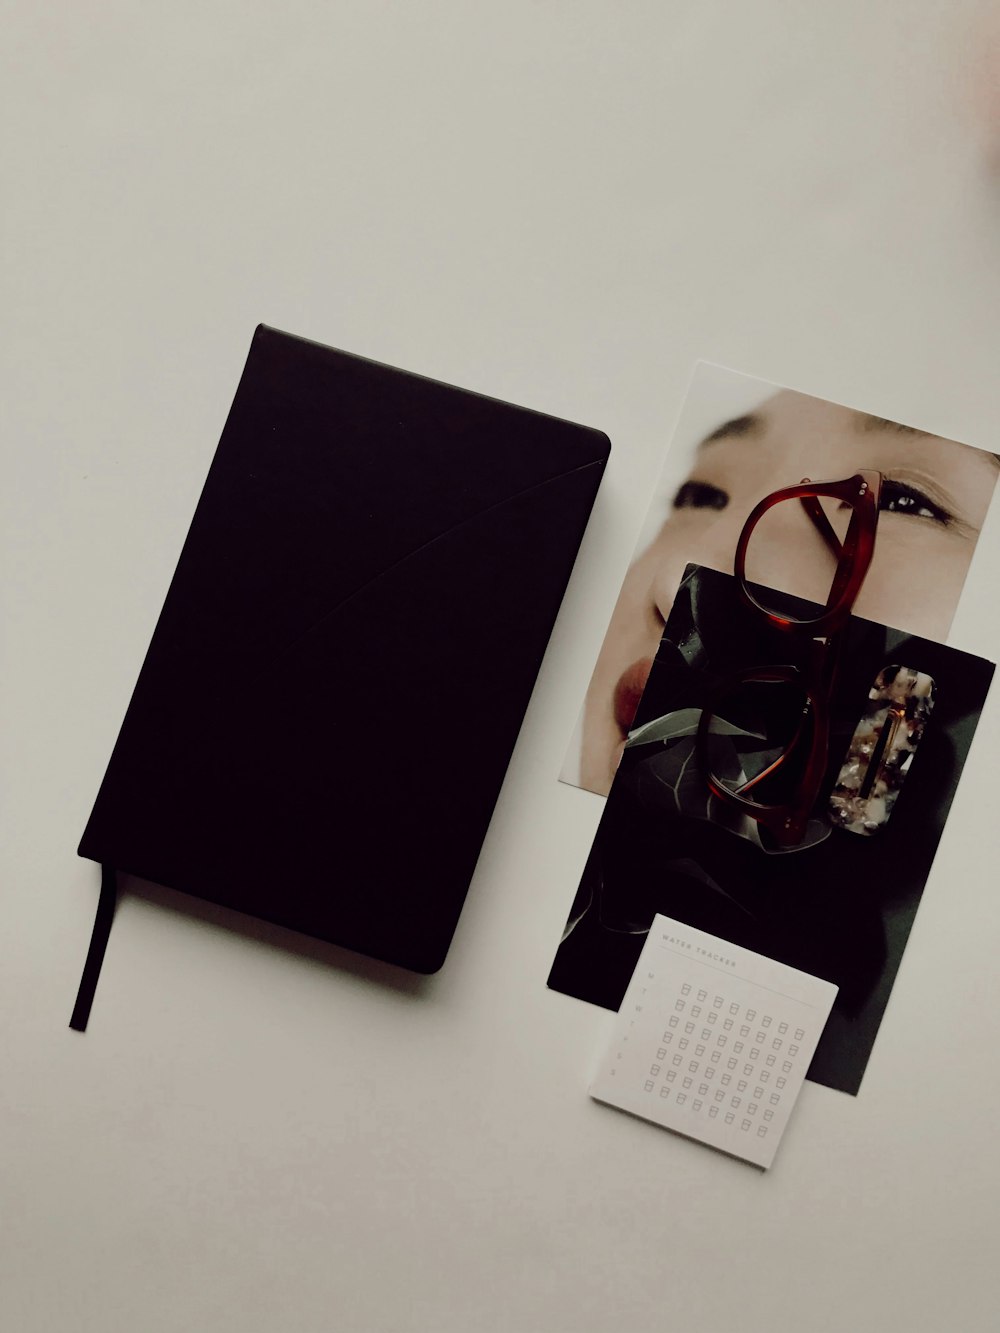 black book besides brown eyeglasses and photos